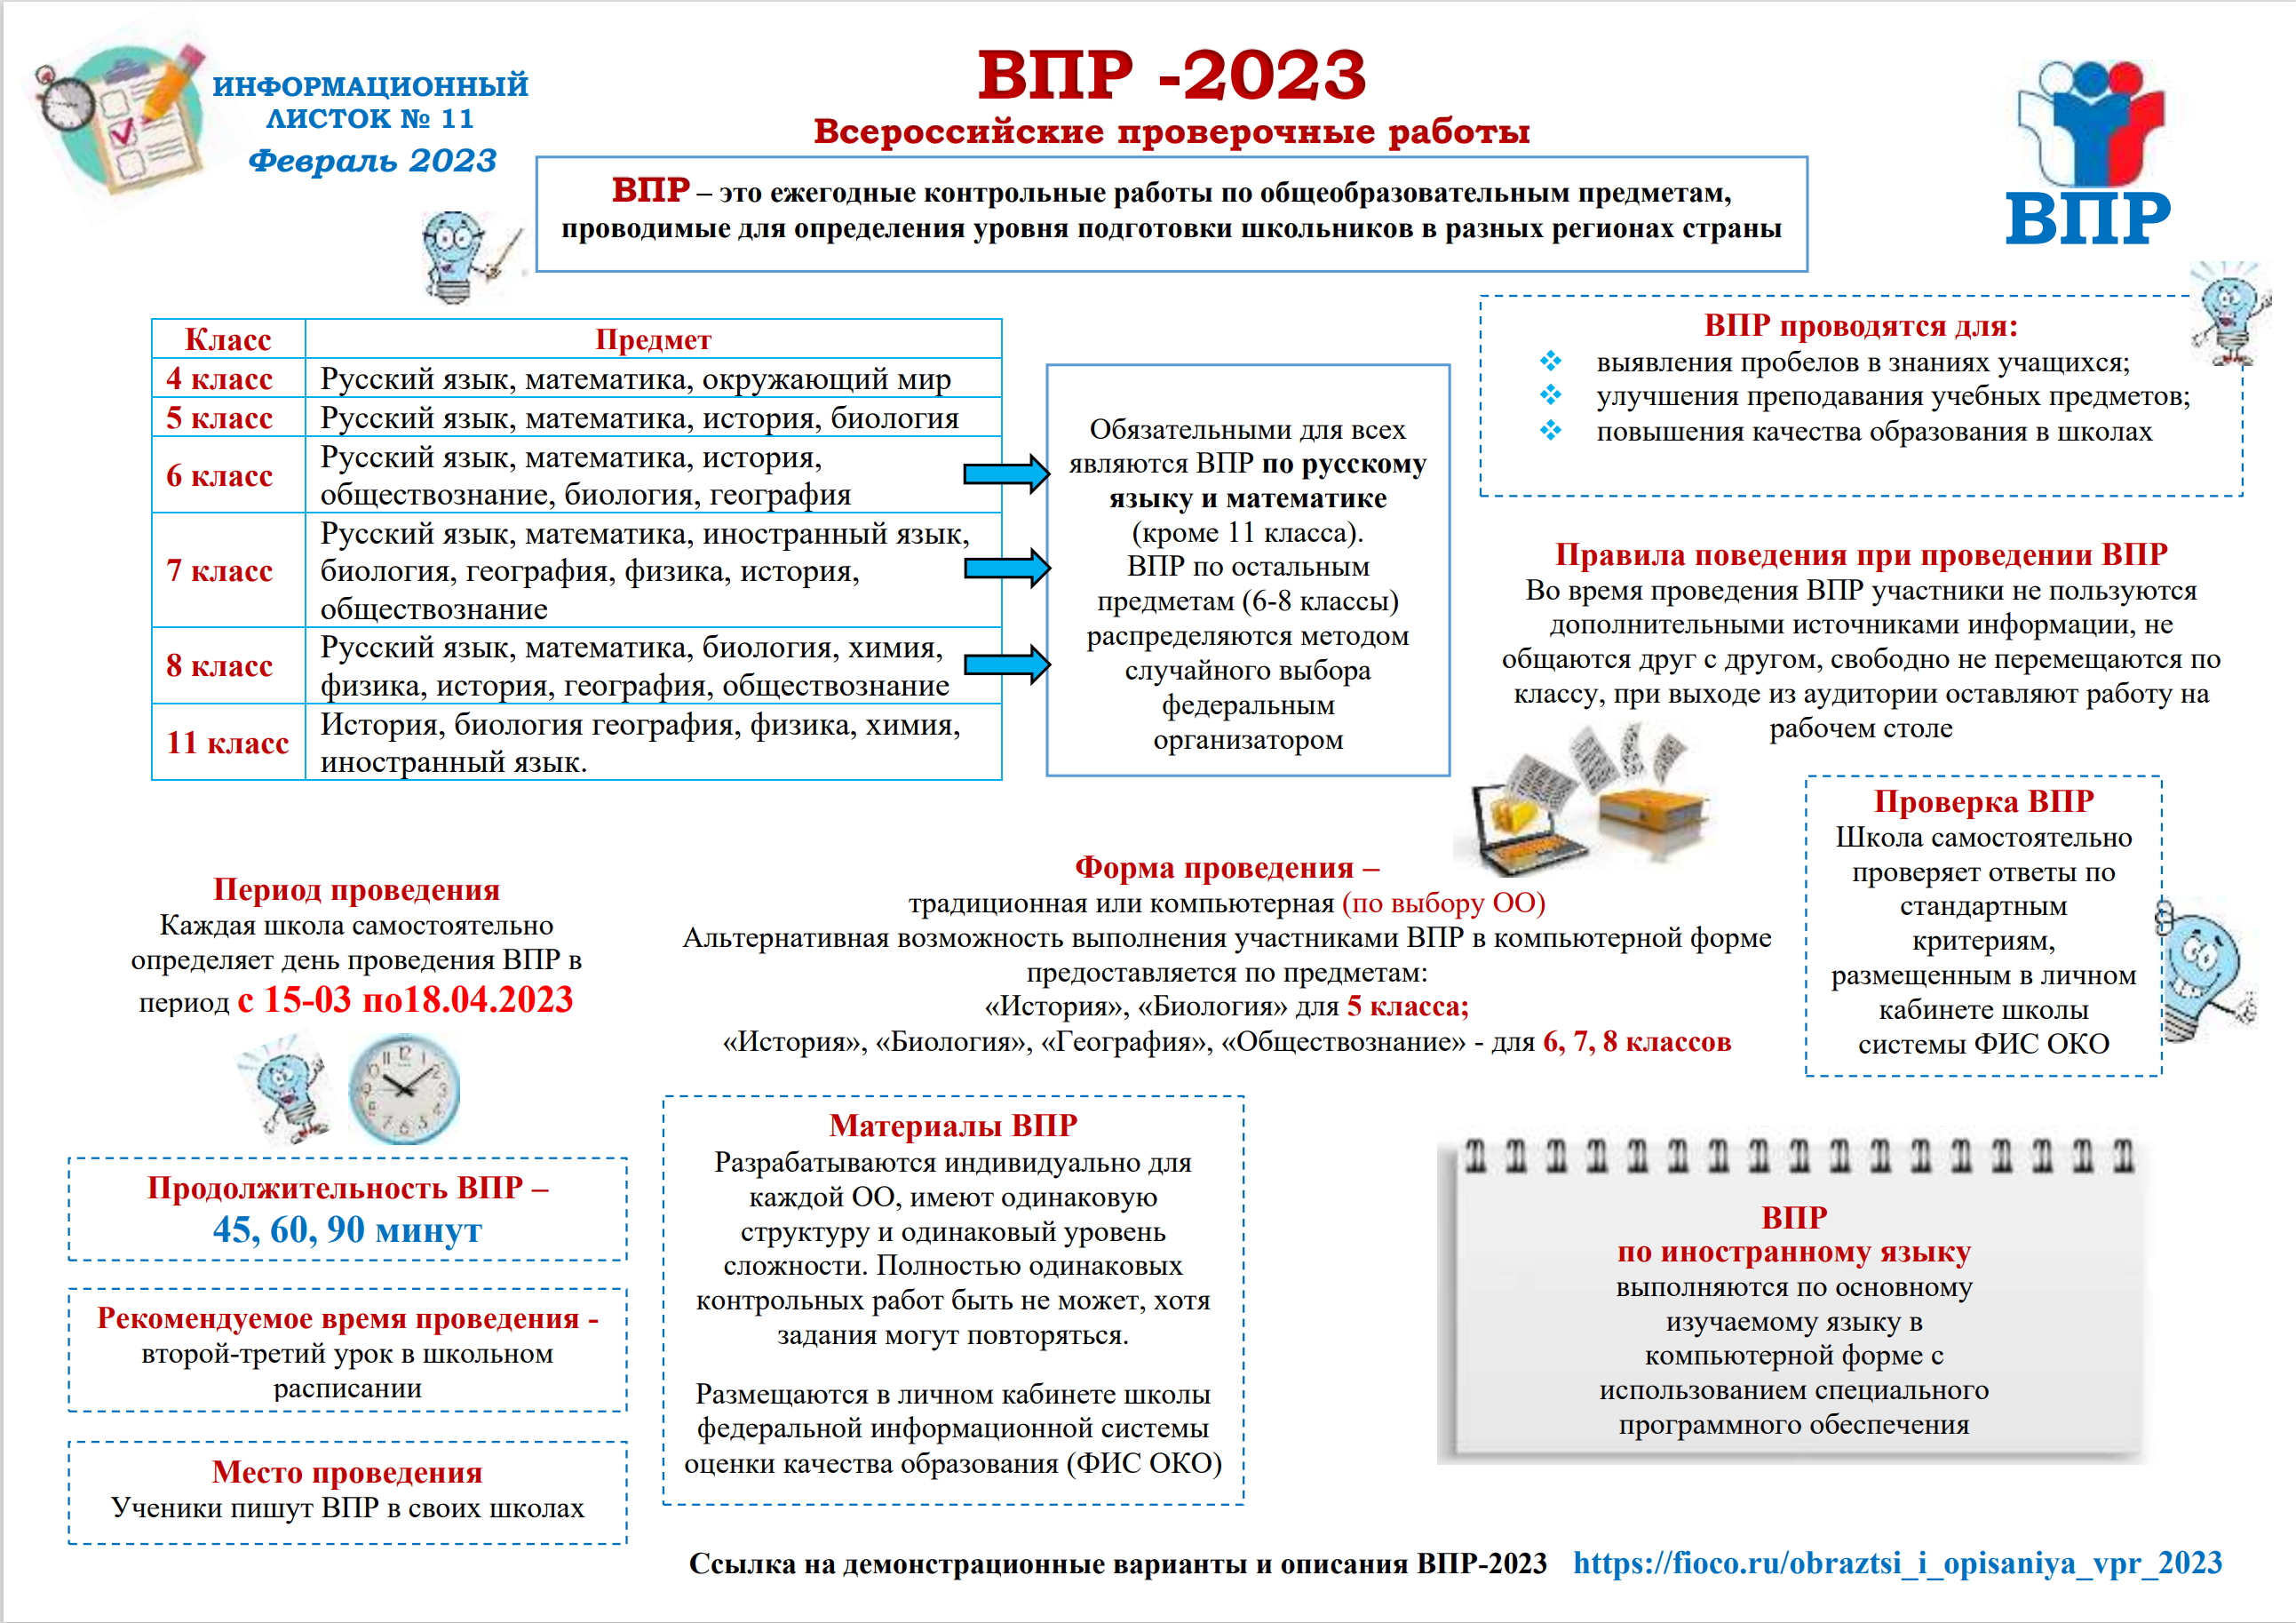 Https fioco ru demo vpr 2023. ВПР 2023. ВПР 2023 год. График проведения ВПР 2023. Проведение ВПР В 2023 году.